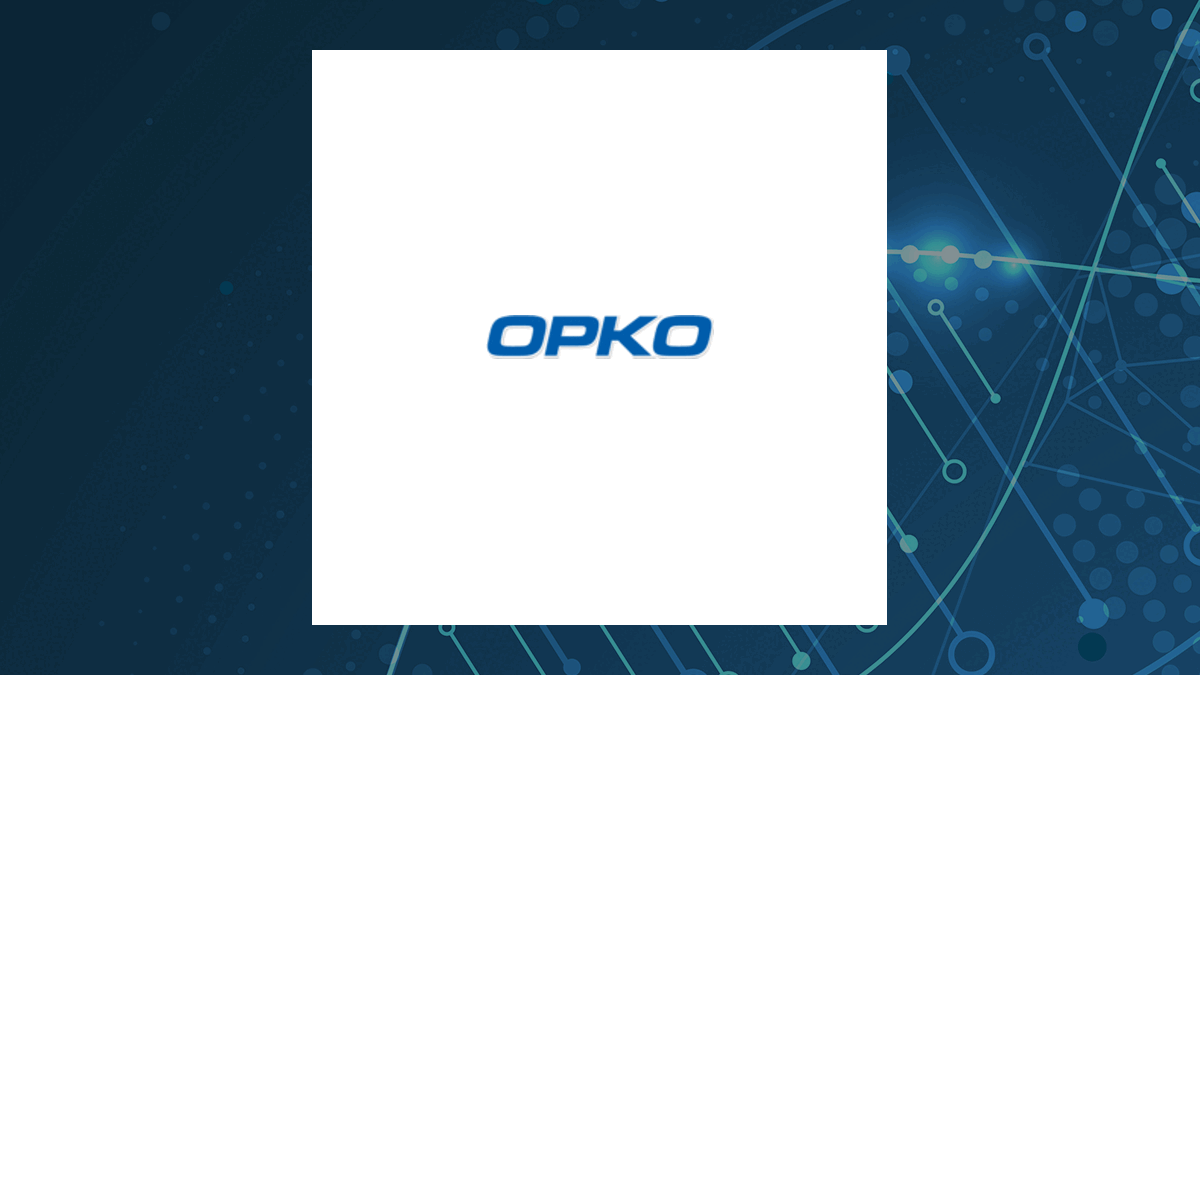 OPKO Health logo with Medical background